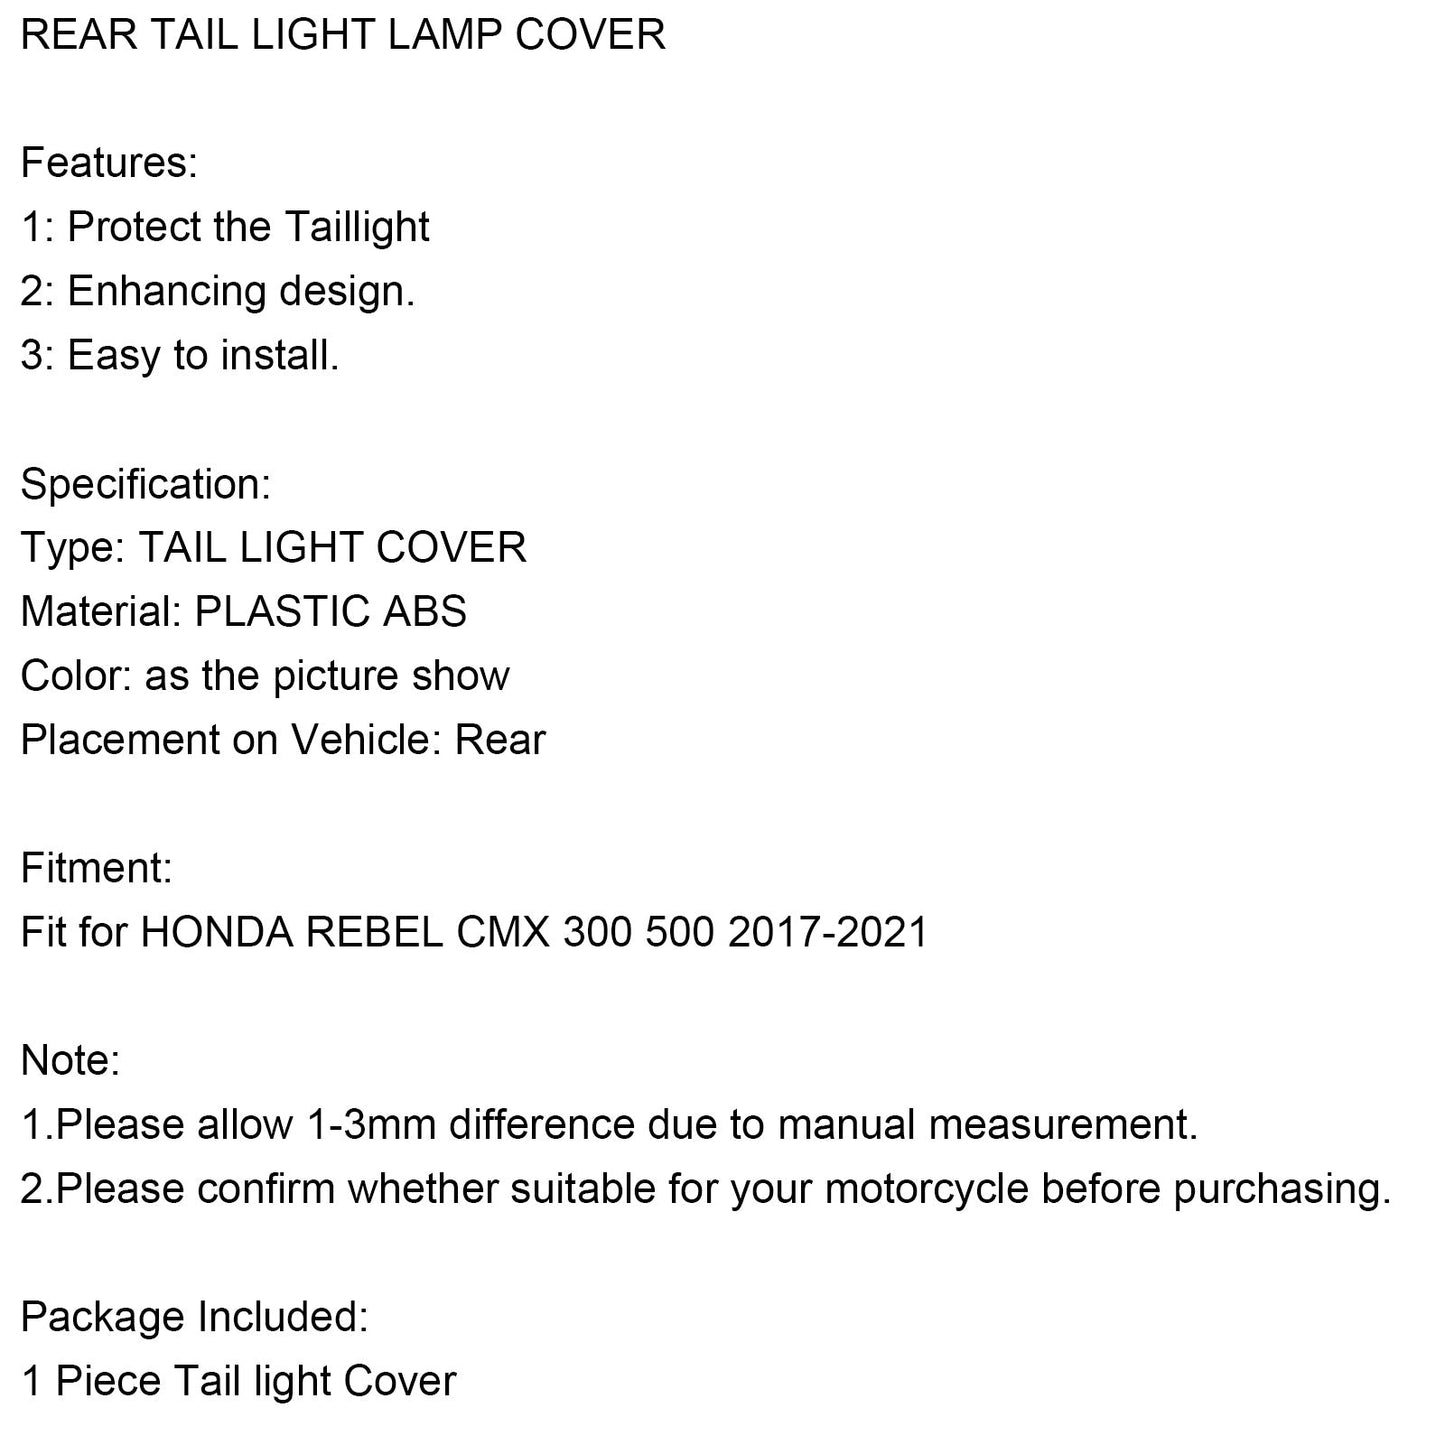 REAR TAIL LIGHT LAMP COVER TRIM ABS FOR HONDA REBEL CMX 300 500 2017-2021